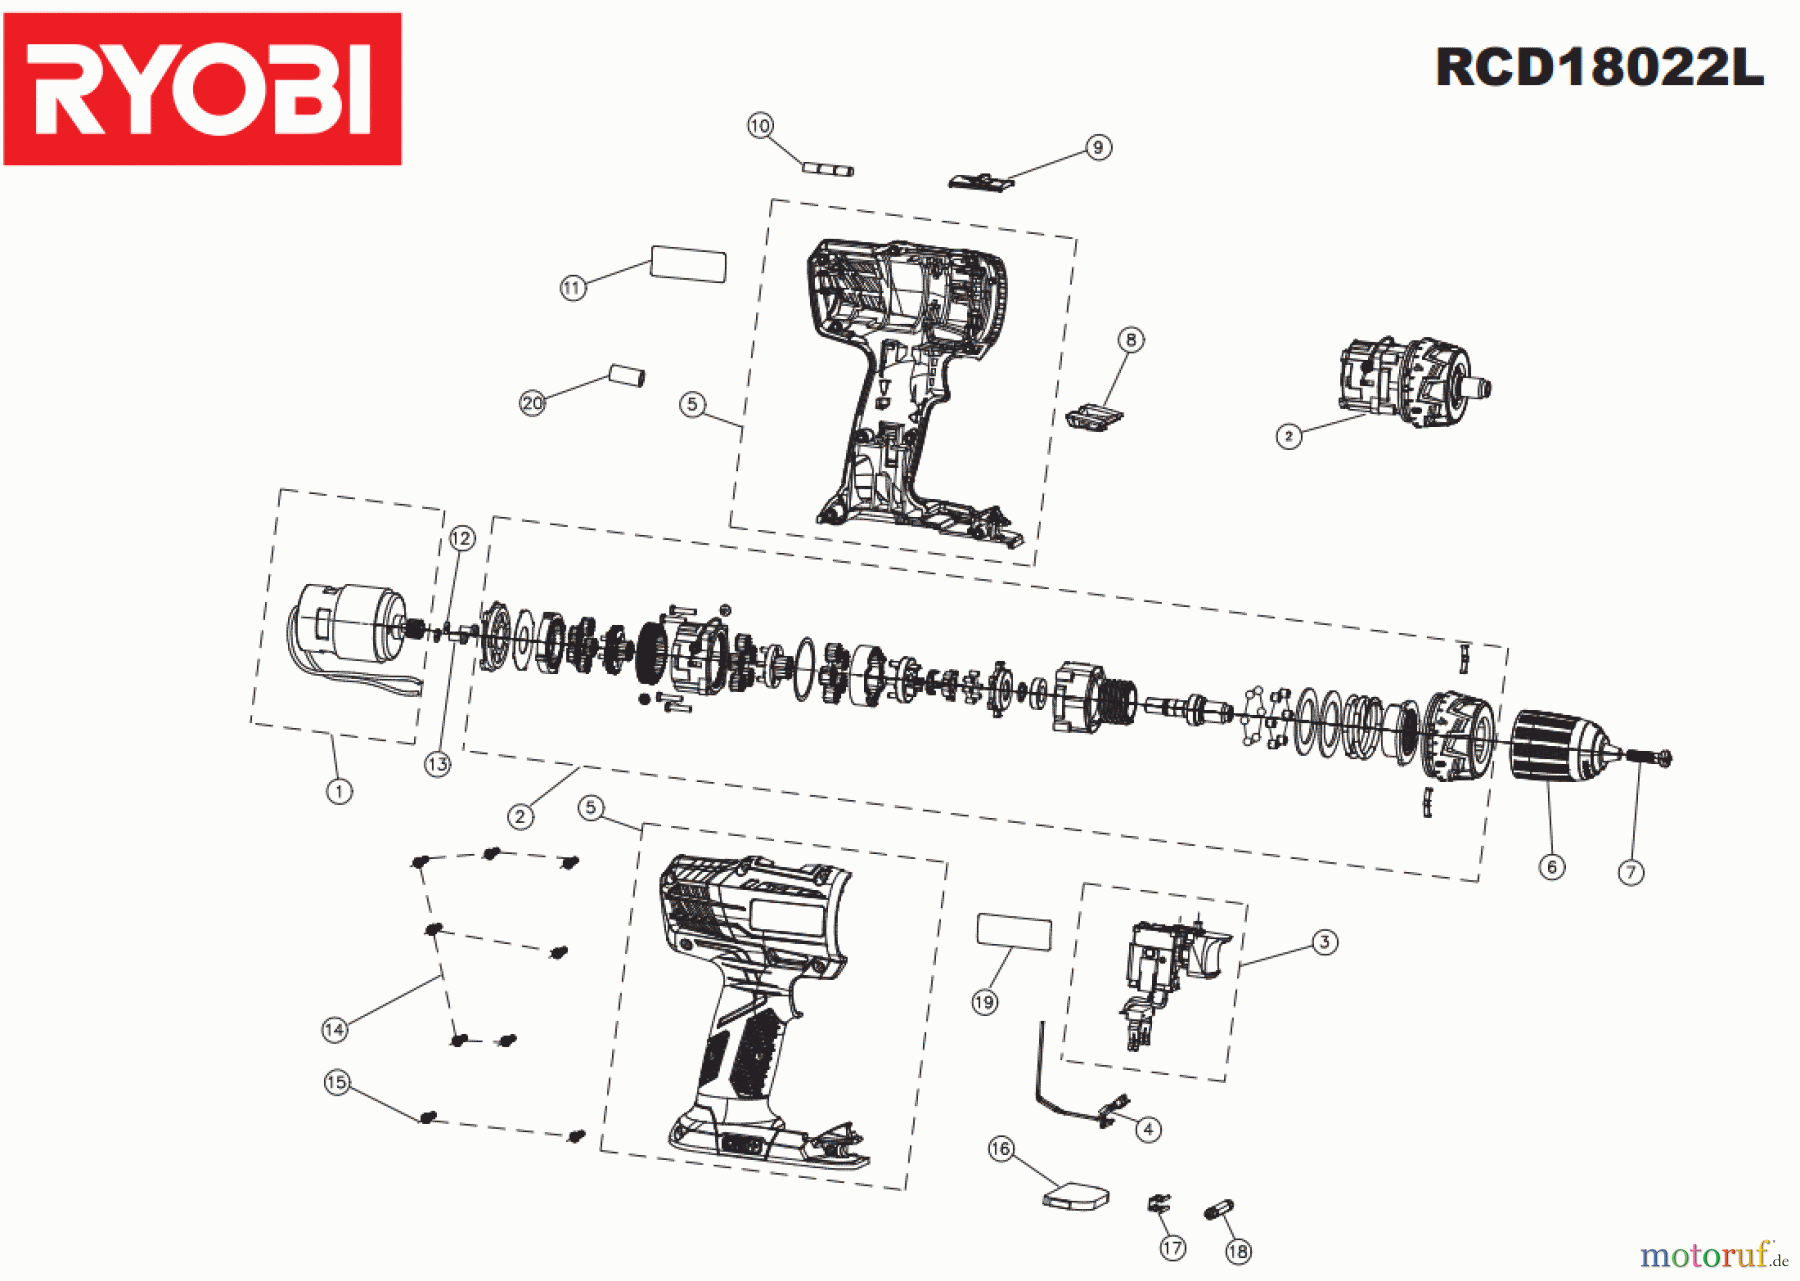  Ryobi (Schlag-)Bohrschrauber Bohrschrauber RCD18022L Seite 1